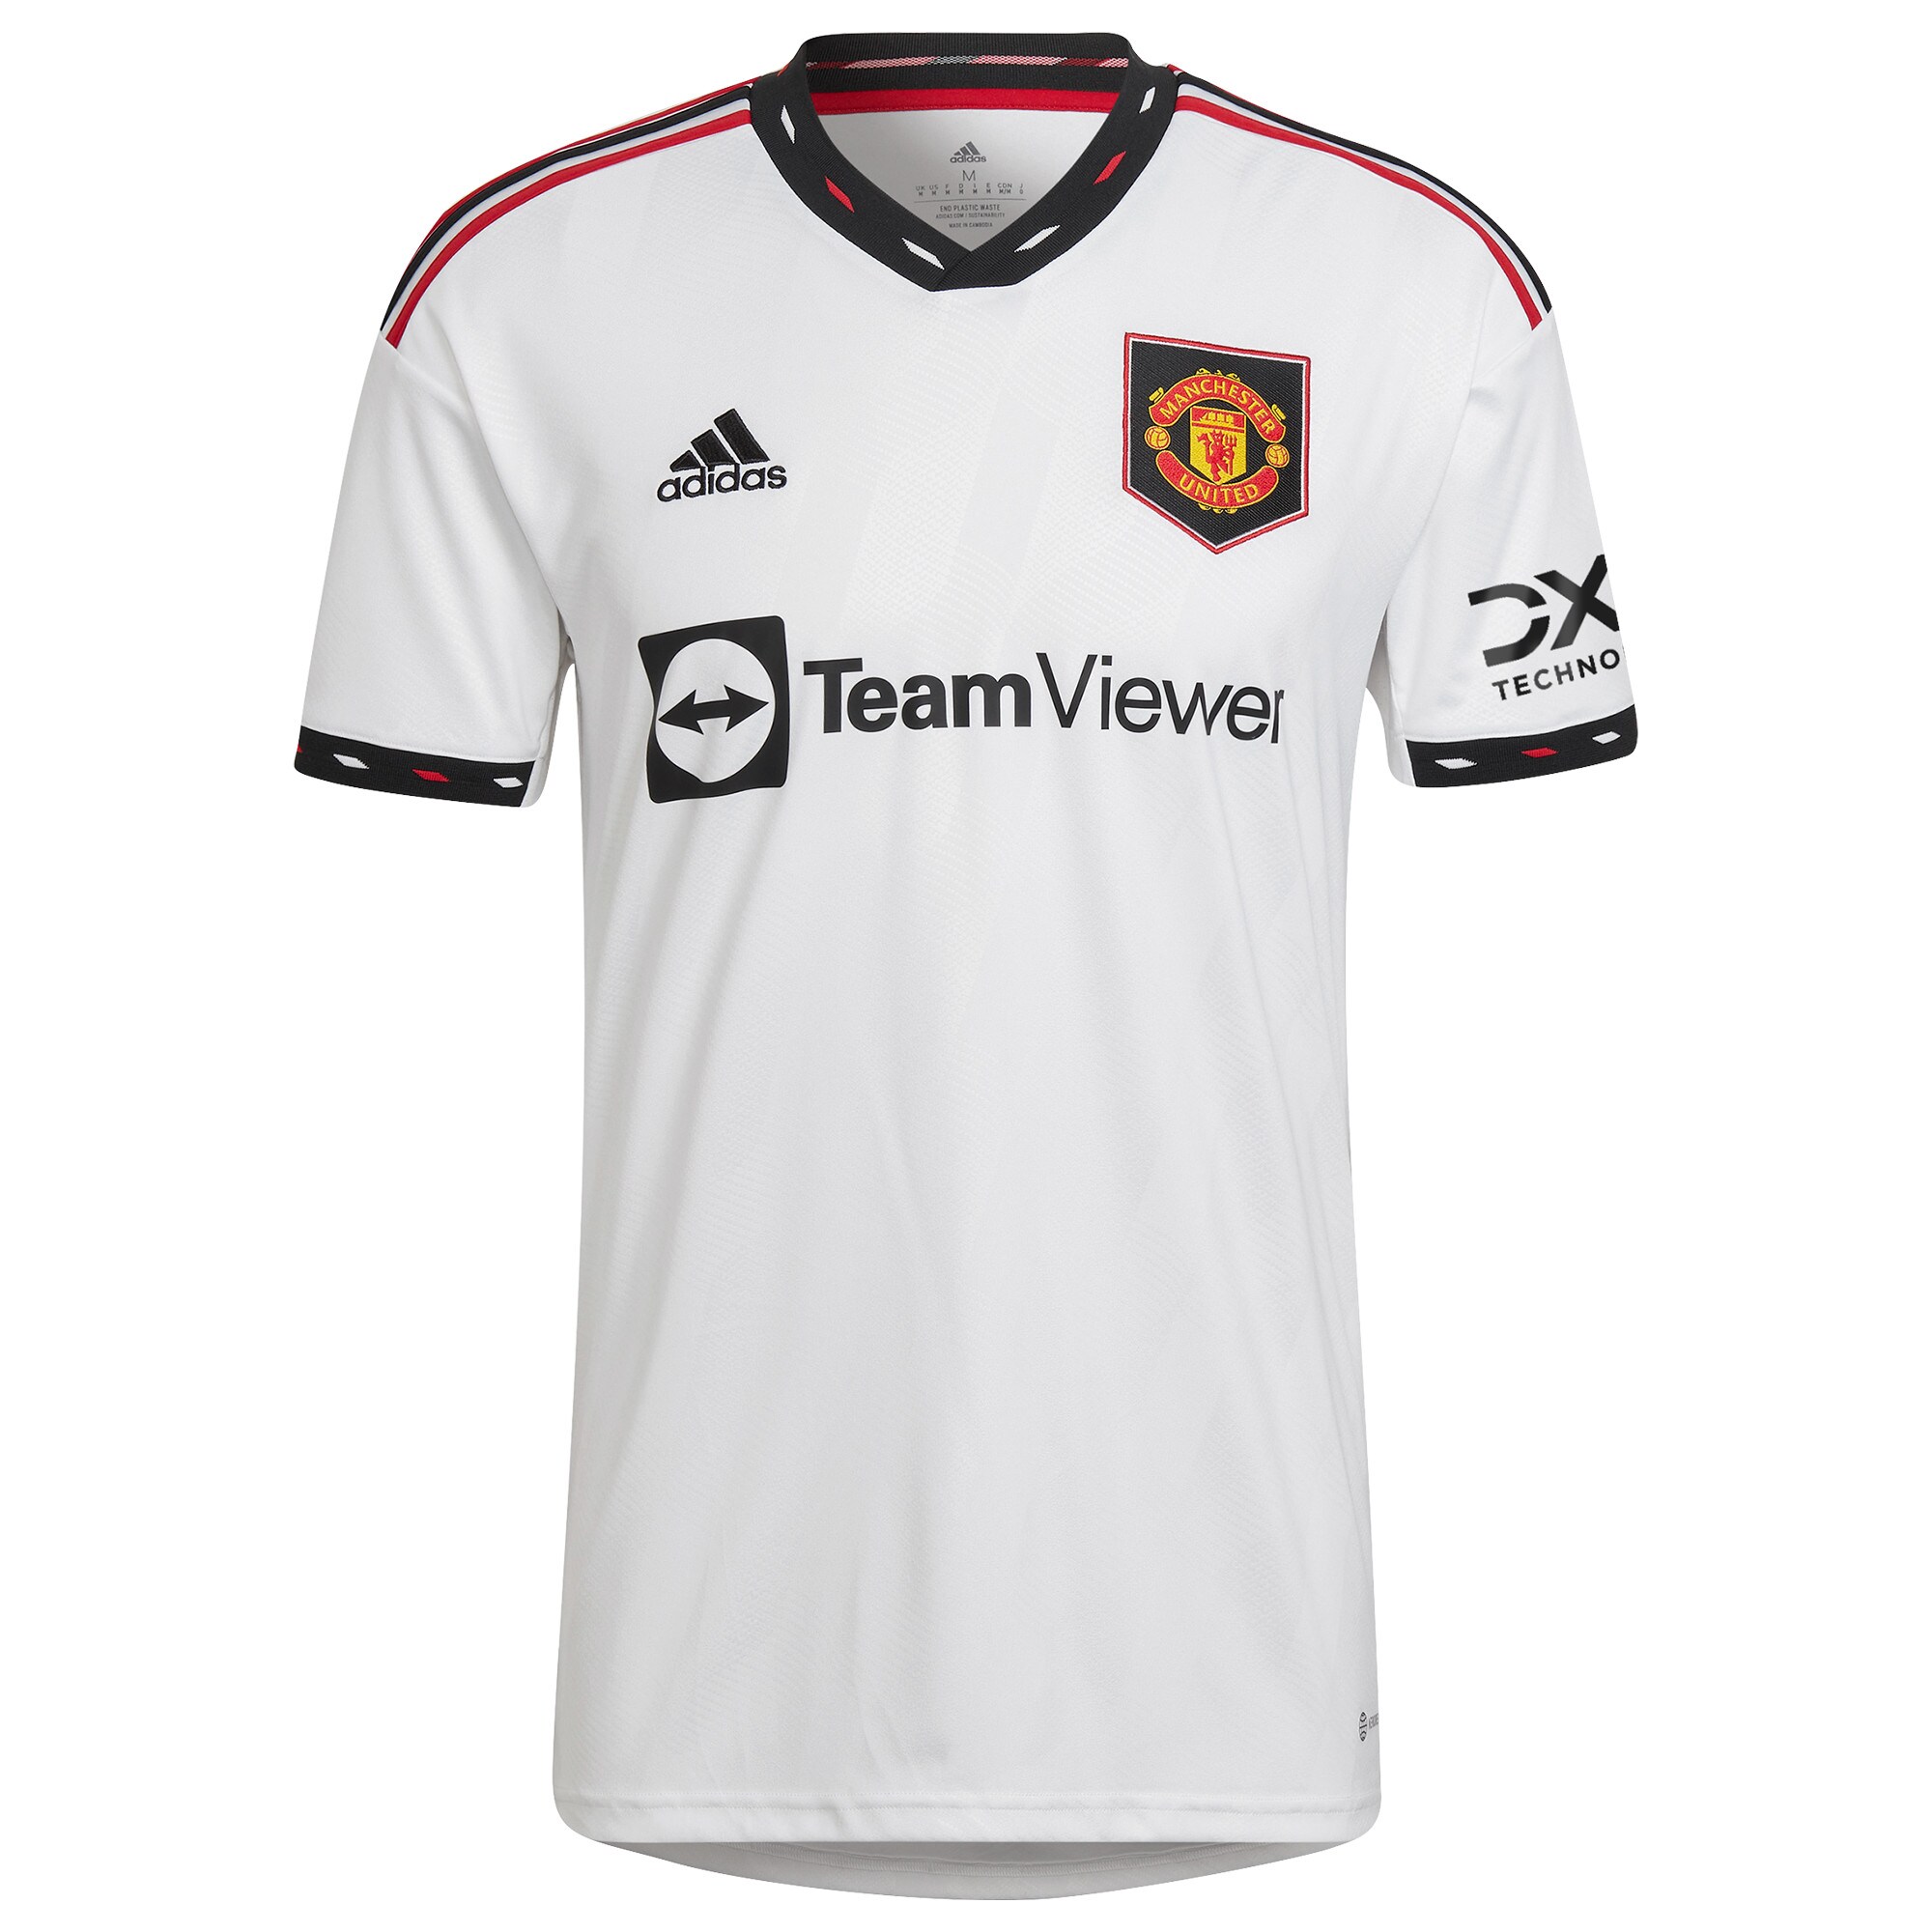 Manchester United Away Shirt 2022-2023 with Elanga 36 printing